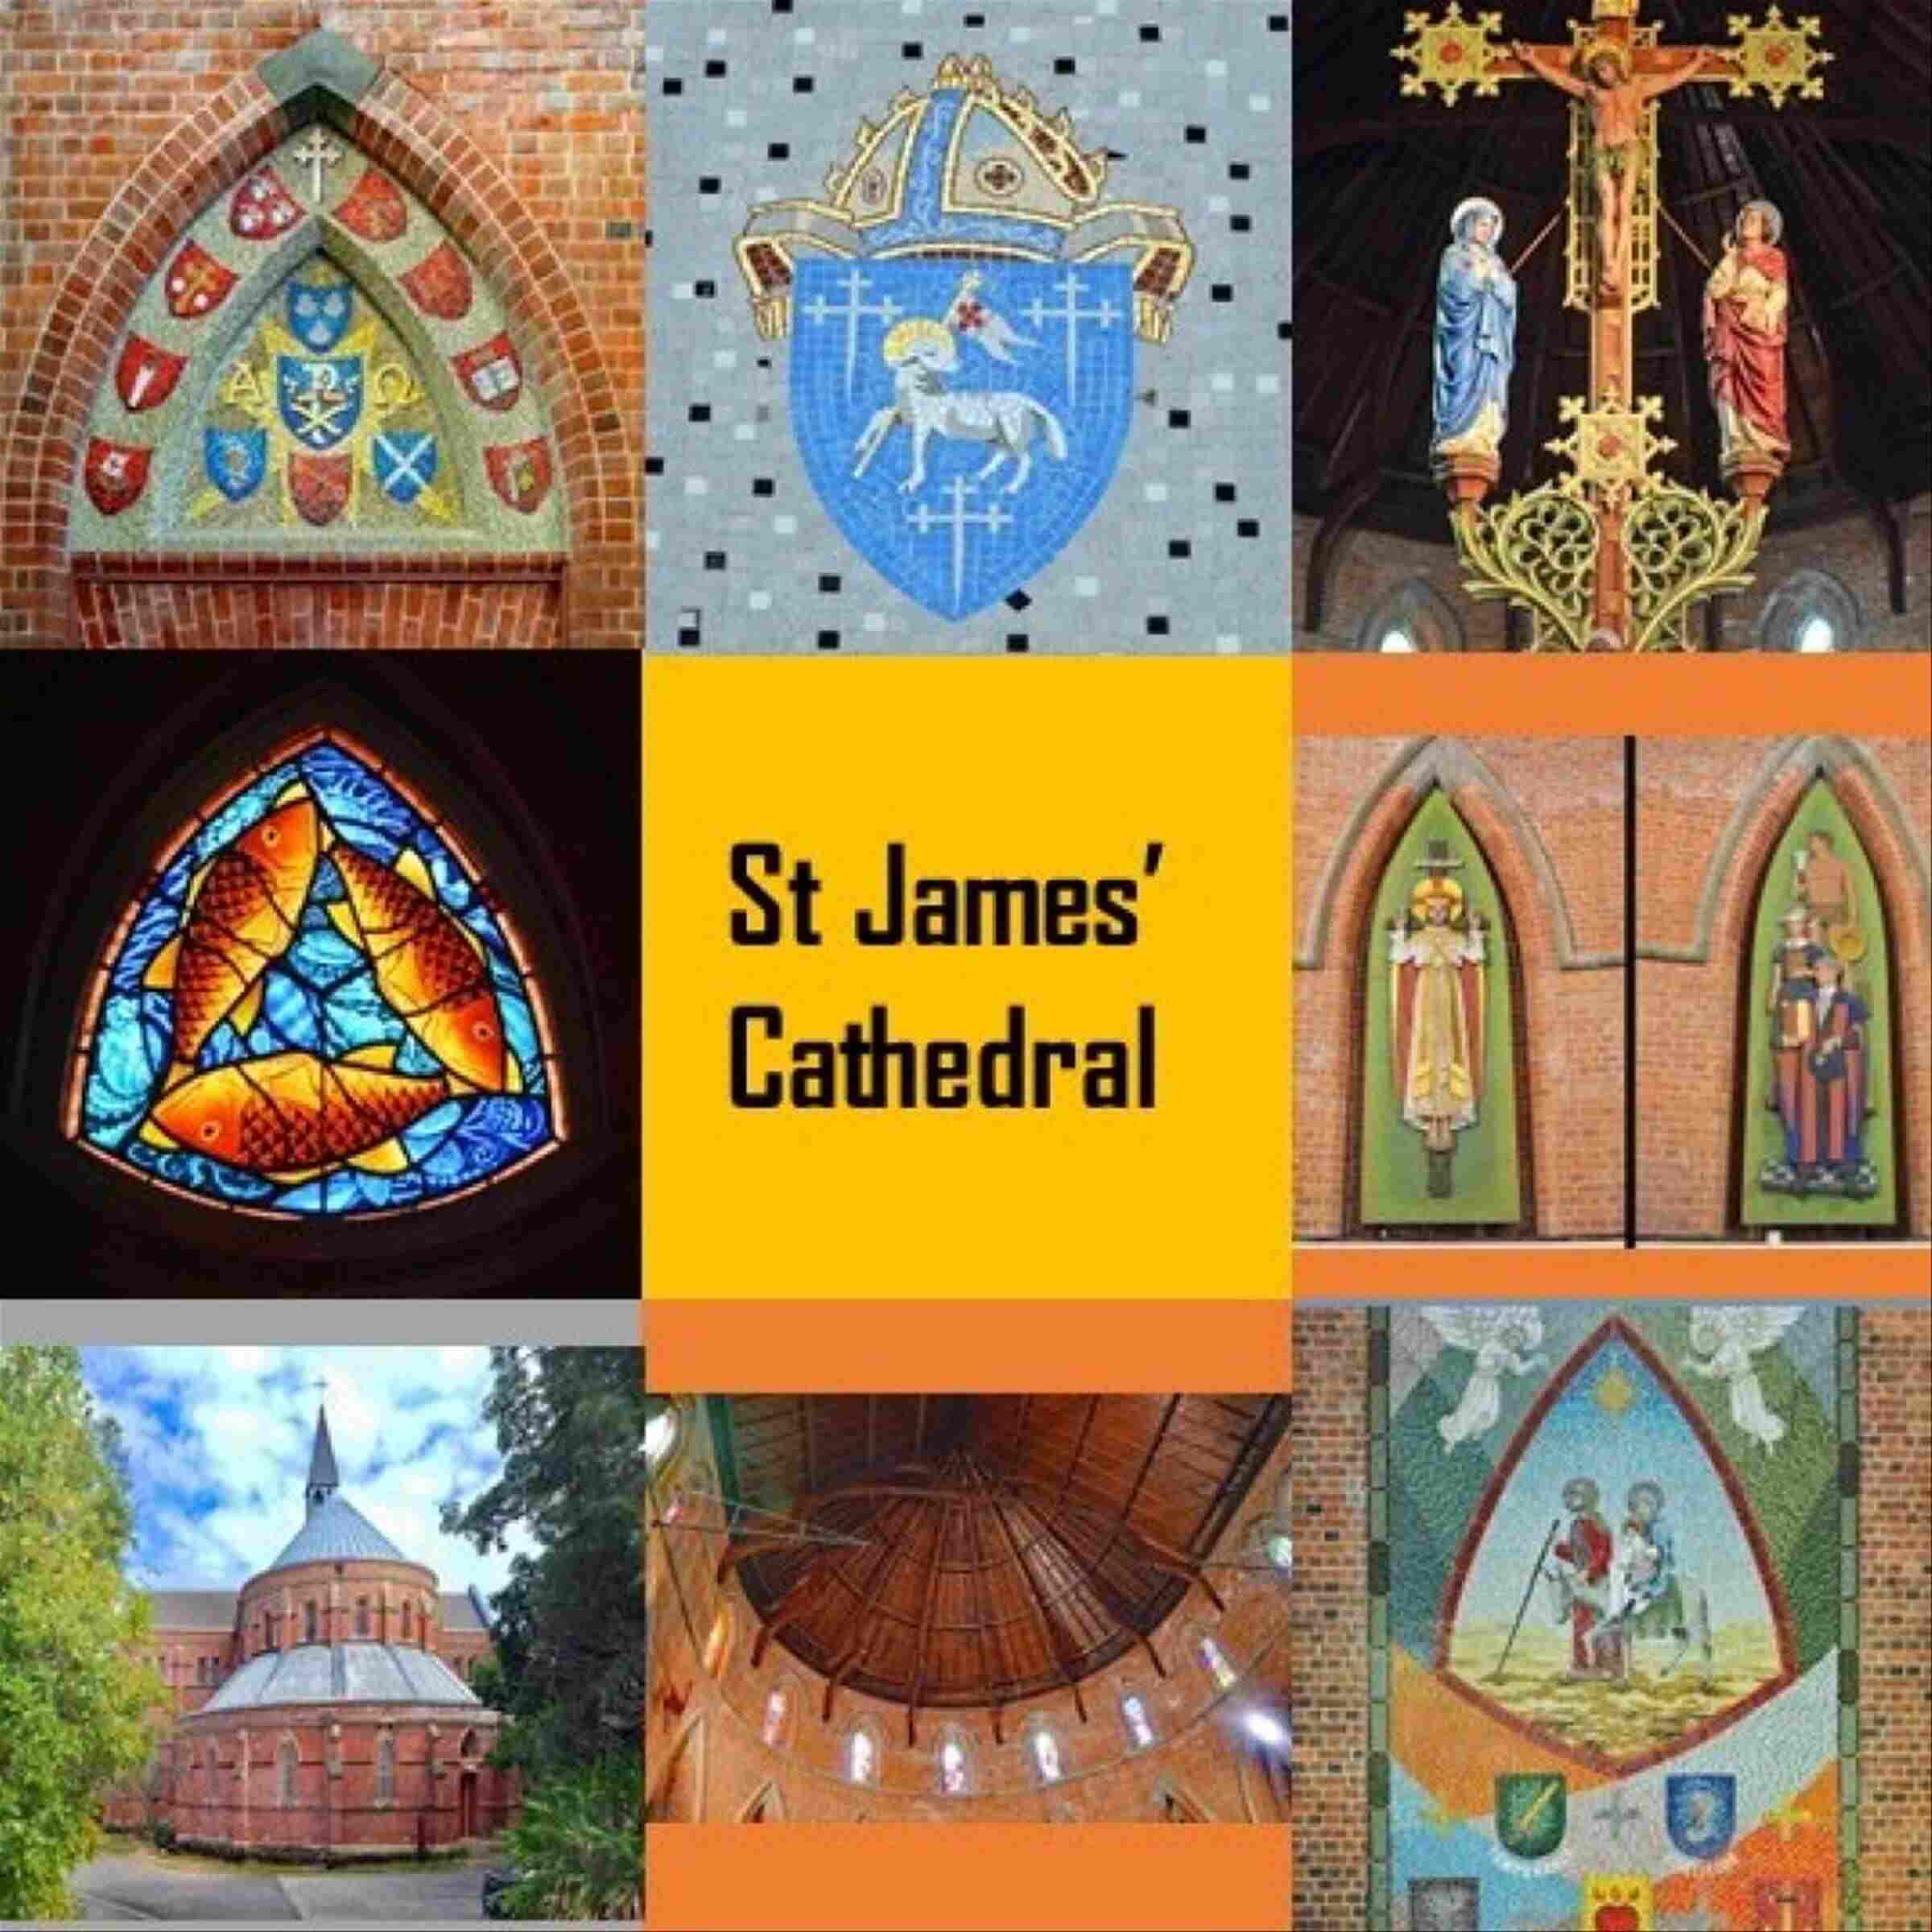 PAST EVENT - Explore St James' Cathedral Artwork